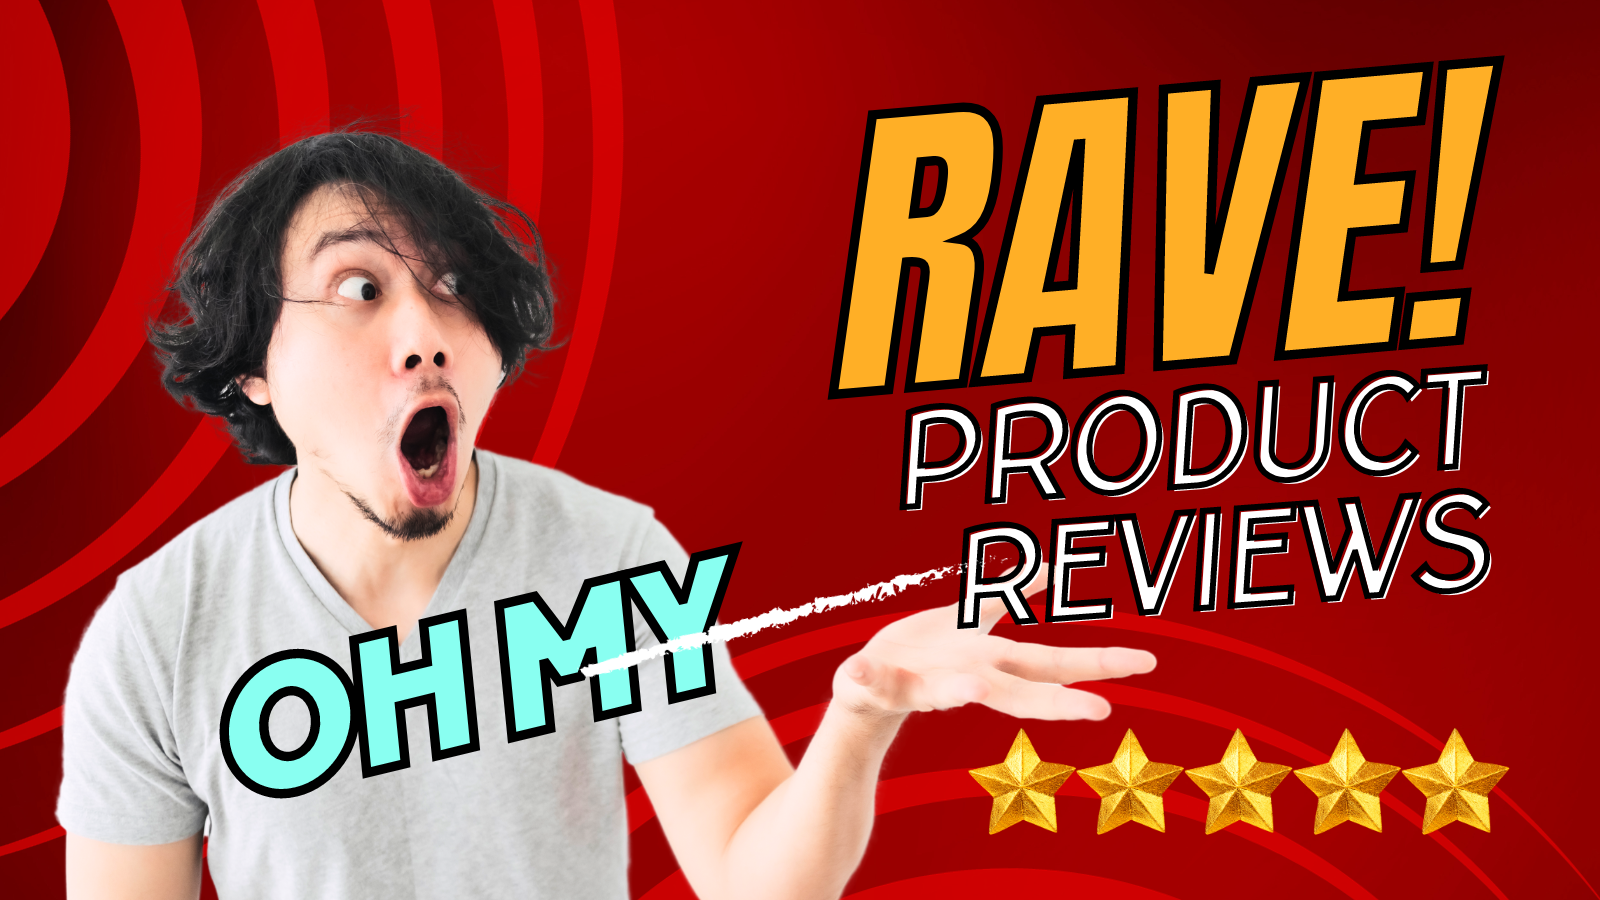 Rave! 产品评论和UGC